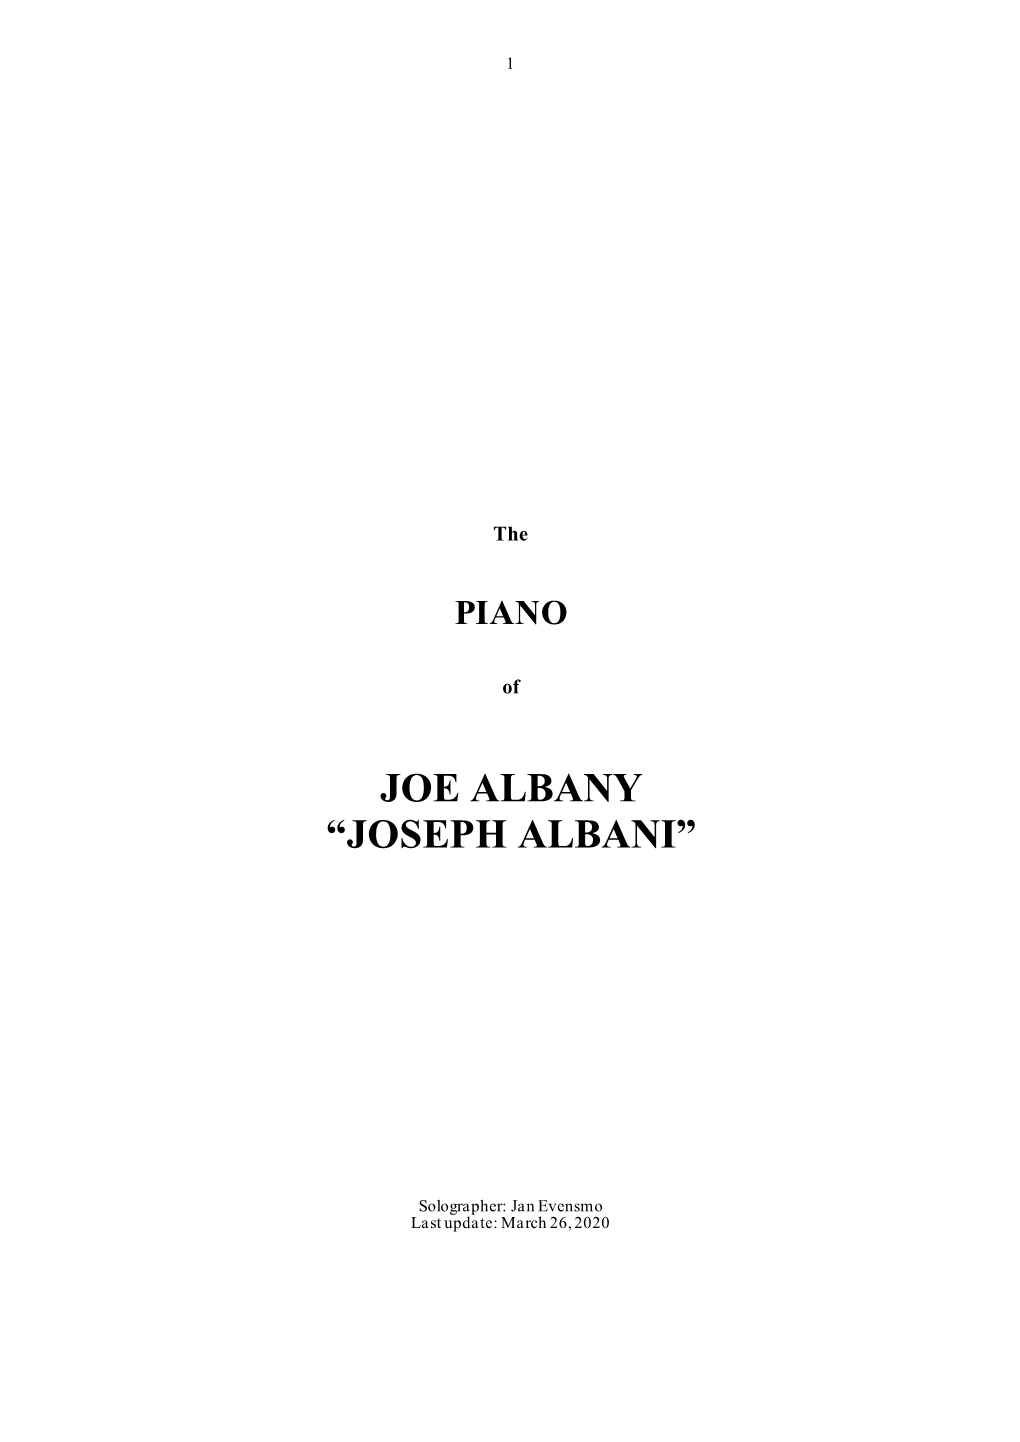 Joe Albany “Joseph Albani”